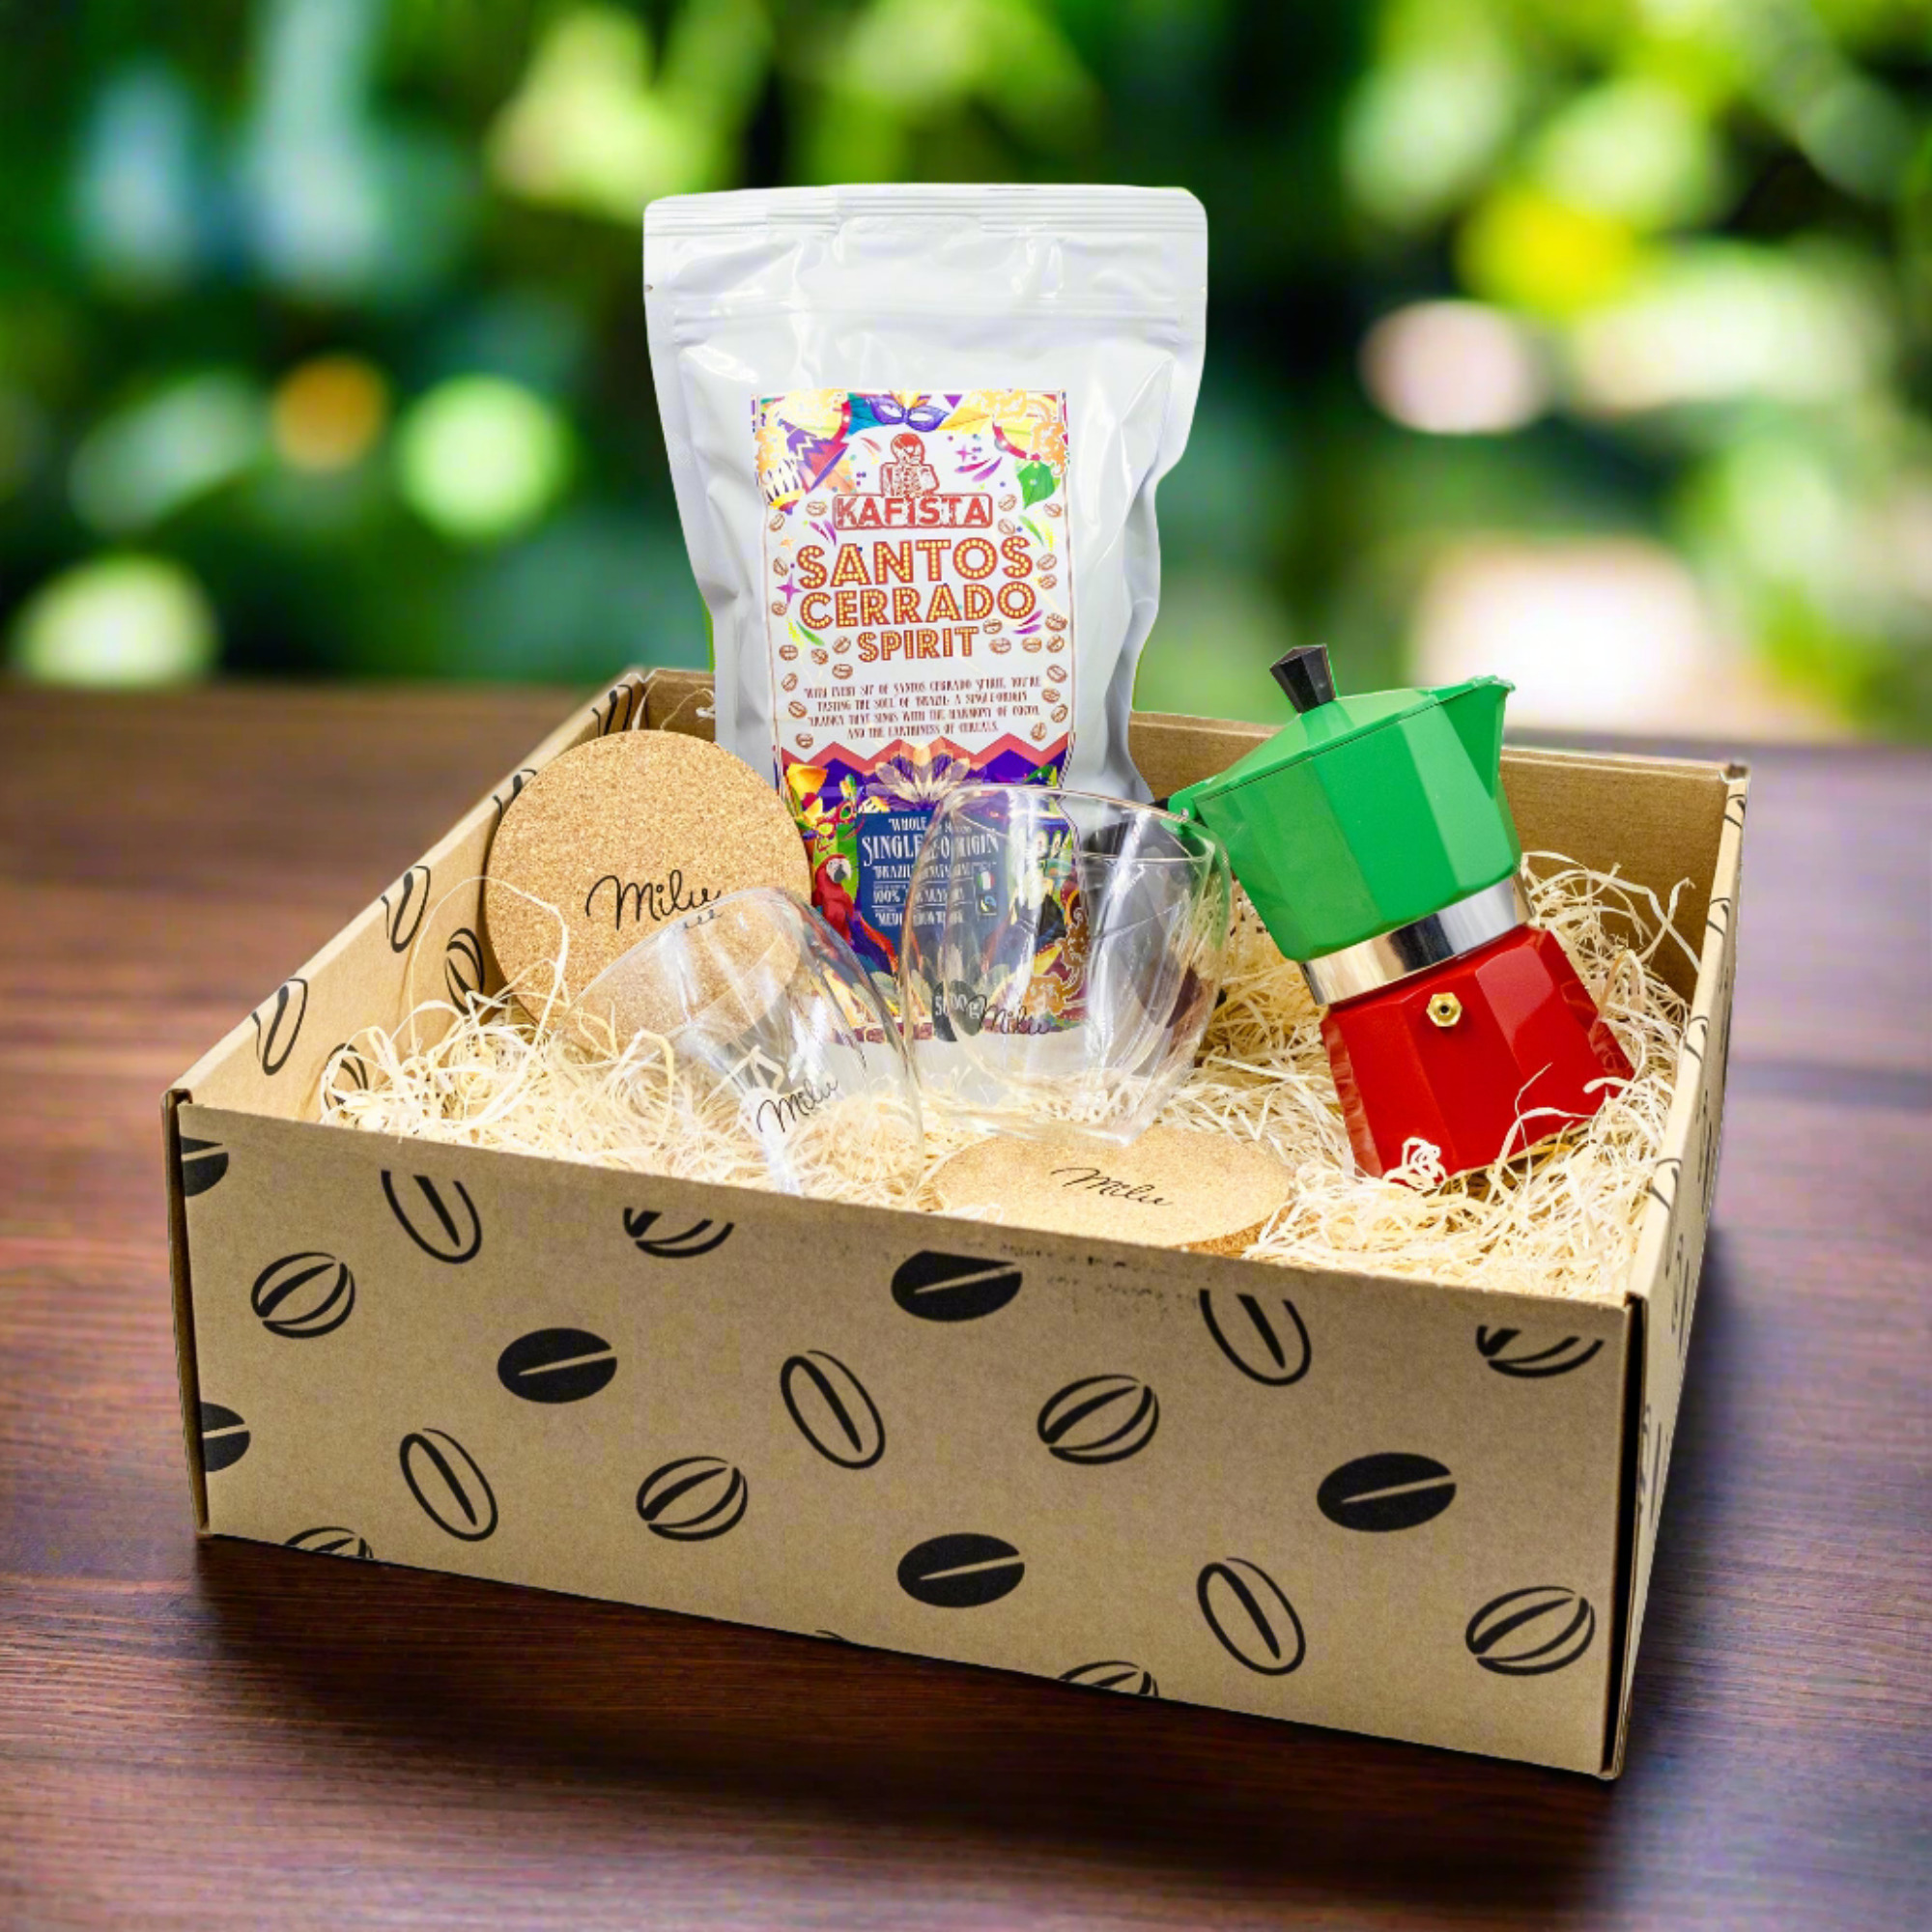 Gift Box 2 - Dárkový balíček s kávou Kafista, sadou termosklenic a Italy moka konvičkou - zrnková káva pražená v Itálii